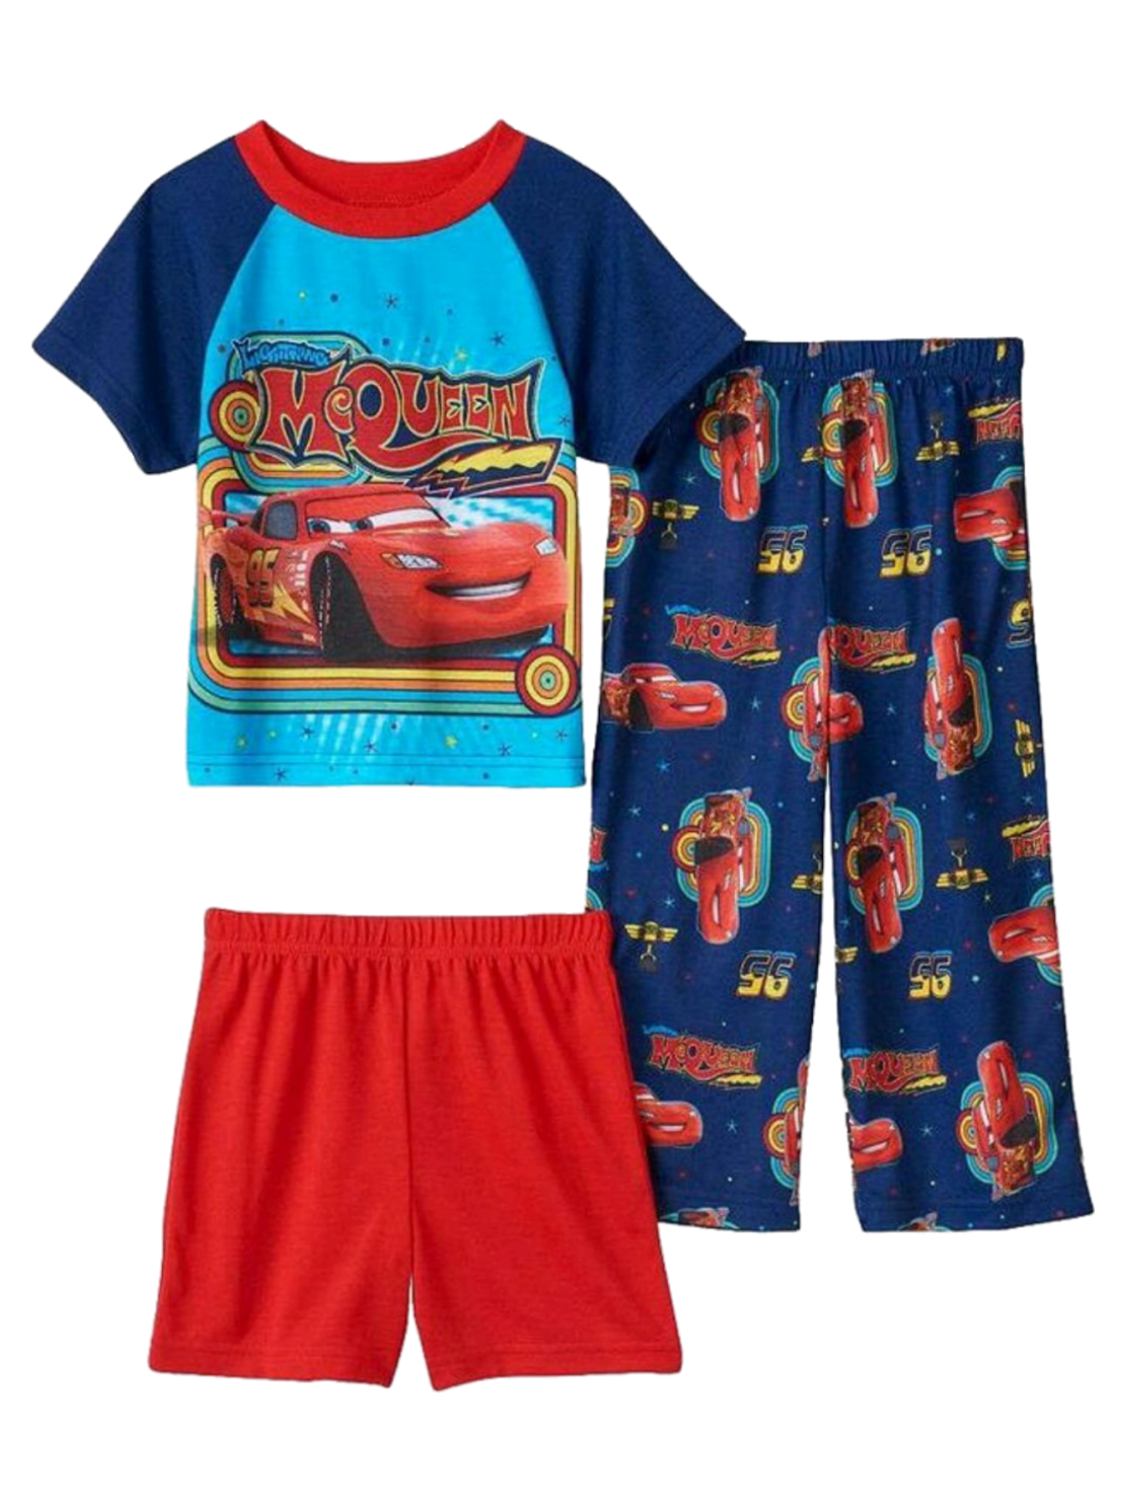 Kids Boys Lightnning McQueen Pajamas Thermal Underwear Nightwear Clothes Outfits